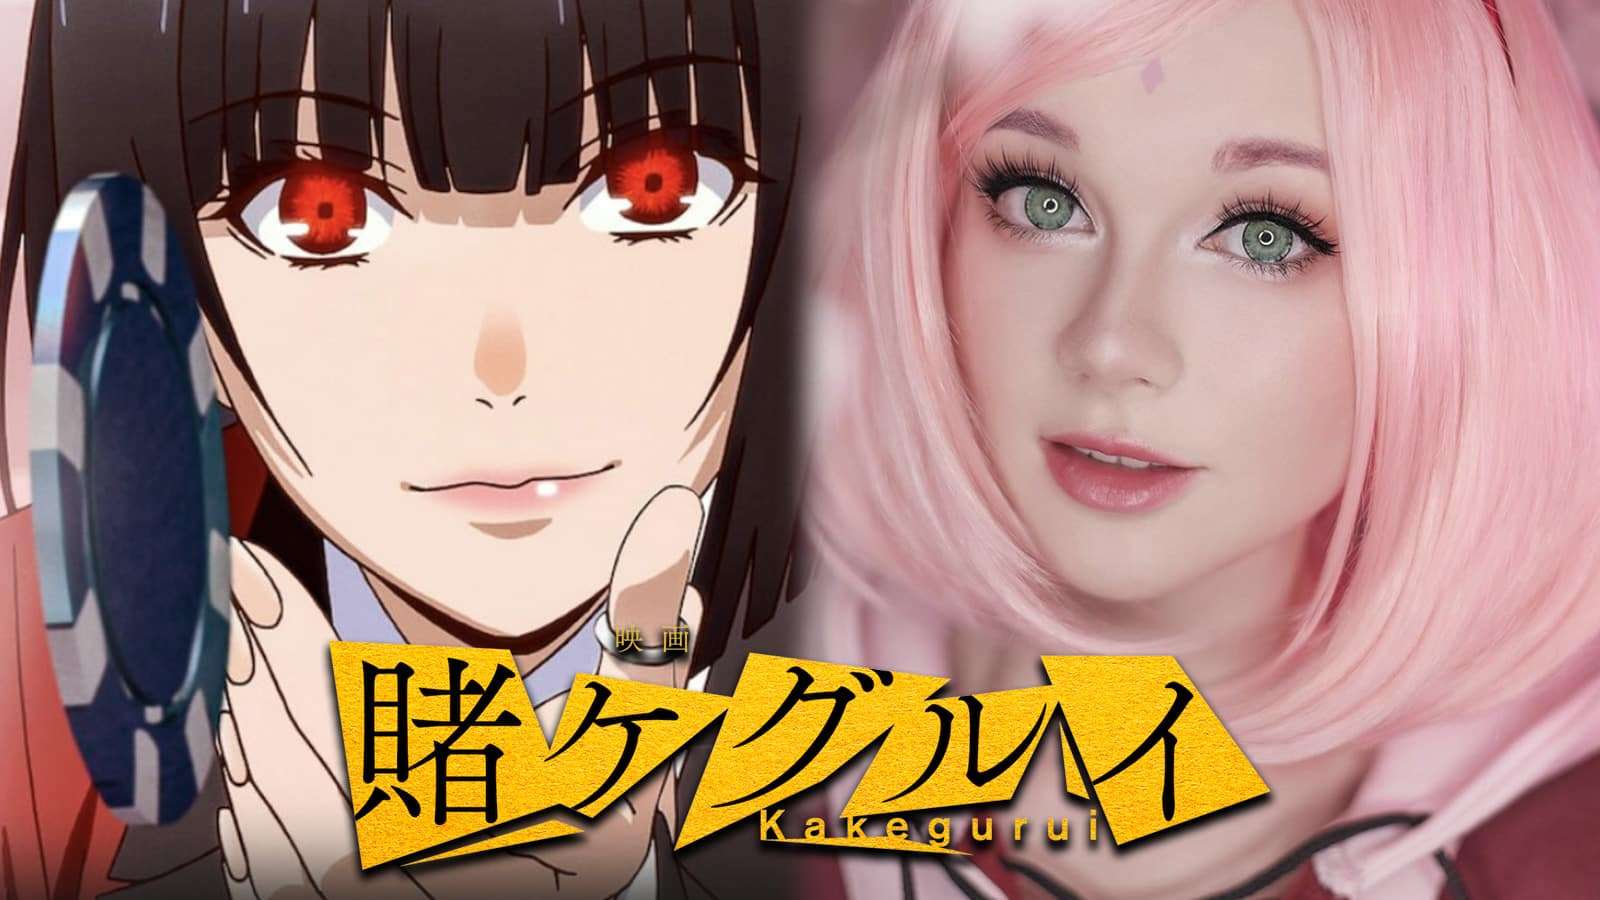 Yumeko Jabami from Kakegurui anime next to cosplayer